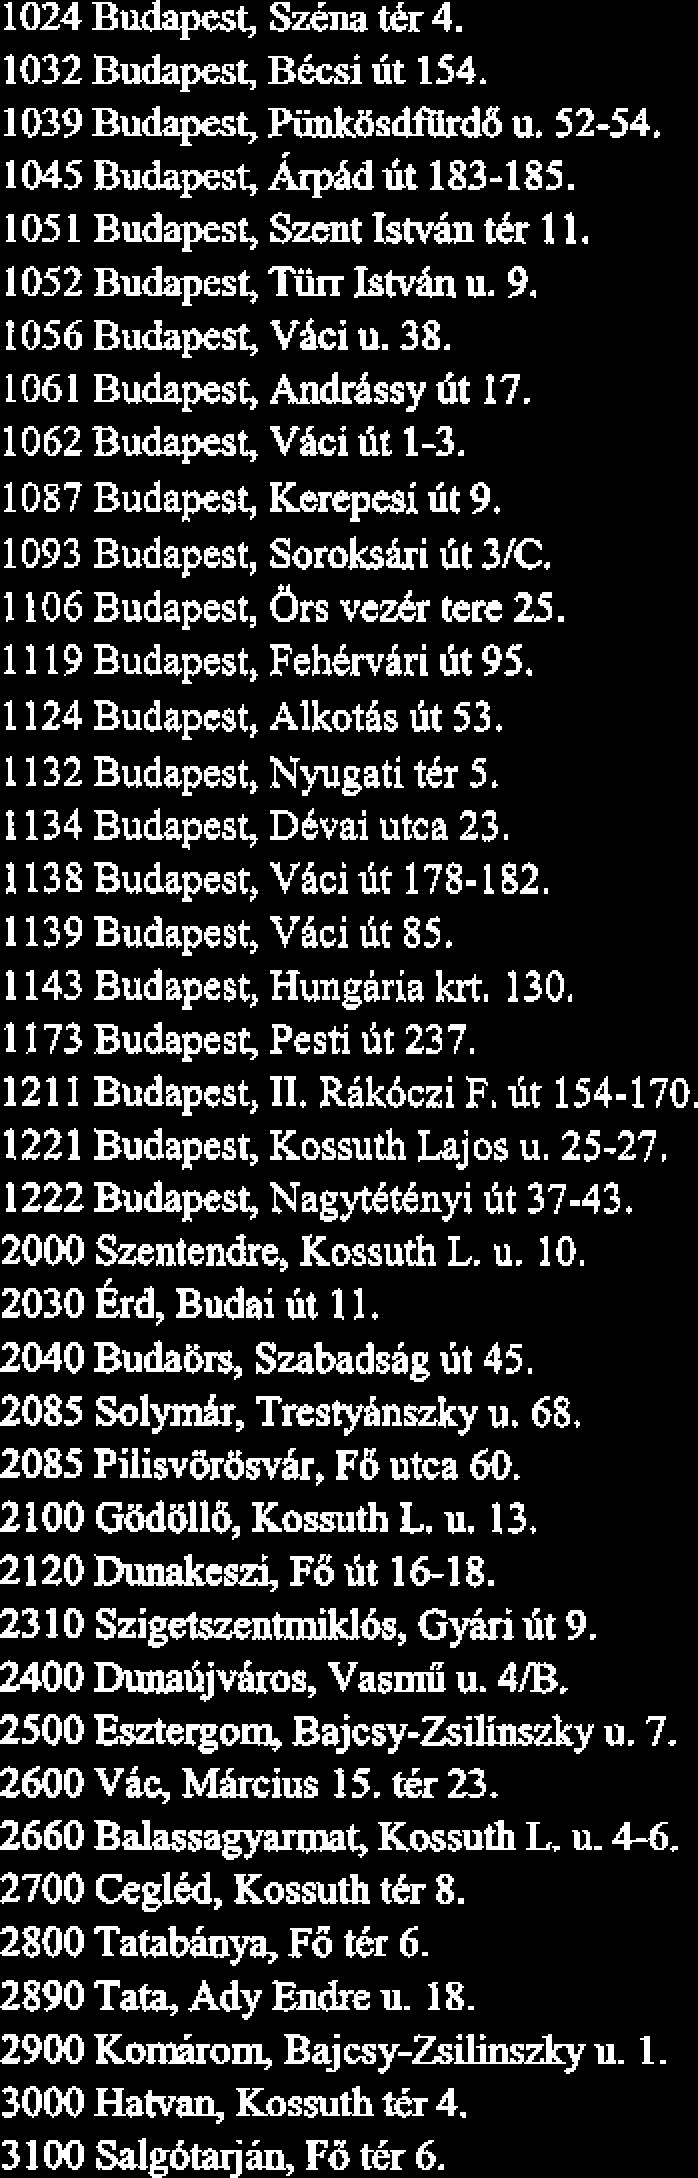 1024 Budapest, Szha tdr 4. 1032 Budapest, Bhi it 154. 1039 Budapesk Pk&sdfWdd u. 52-54. 1045 Budapest, hphd lit 183-185. 1051 Budapest, Smt Is* tdr 1 1. 1052 Budapest, Tiirr Istvan u. 9.